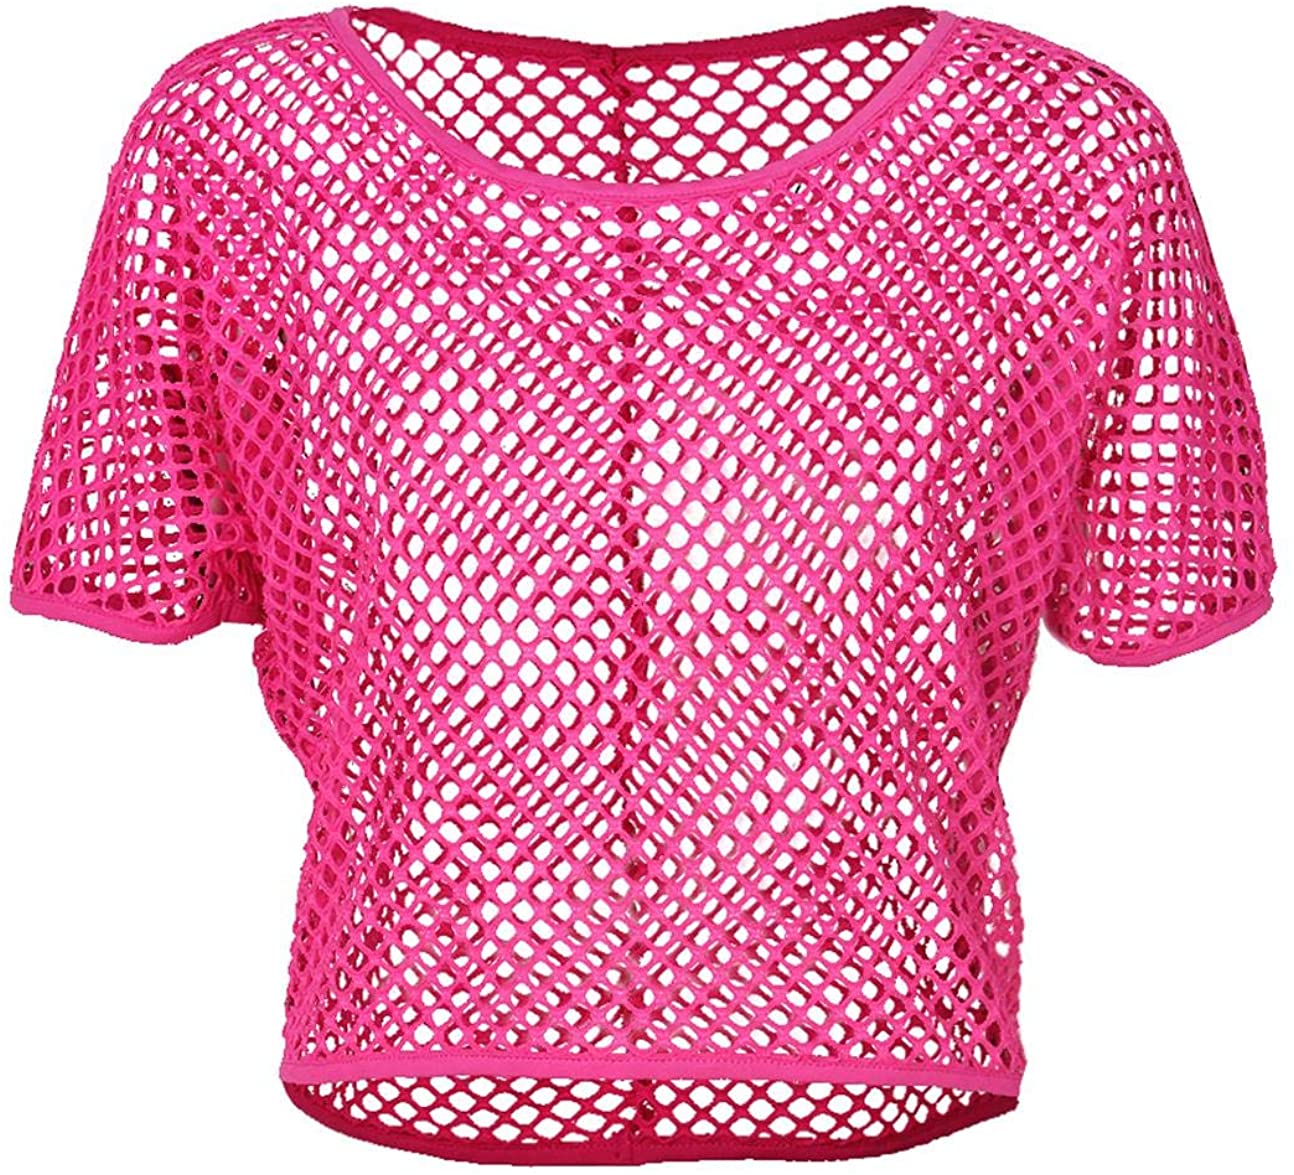 Fluro Pink Short Sleeved Fishnet Top